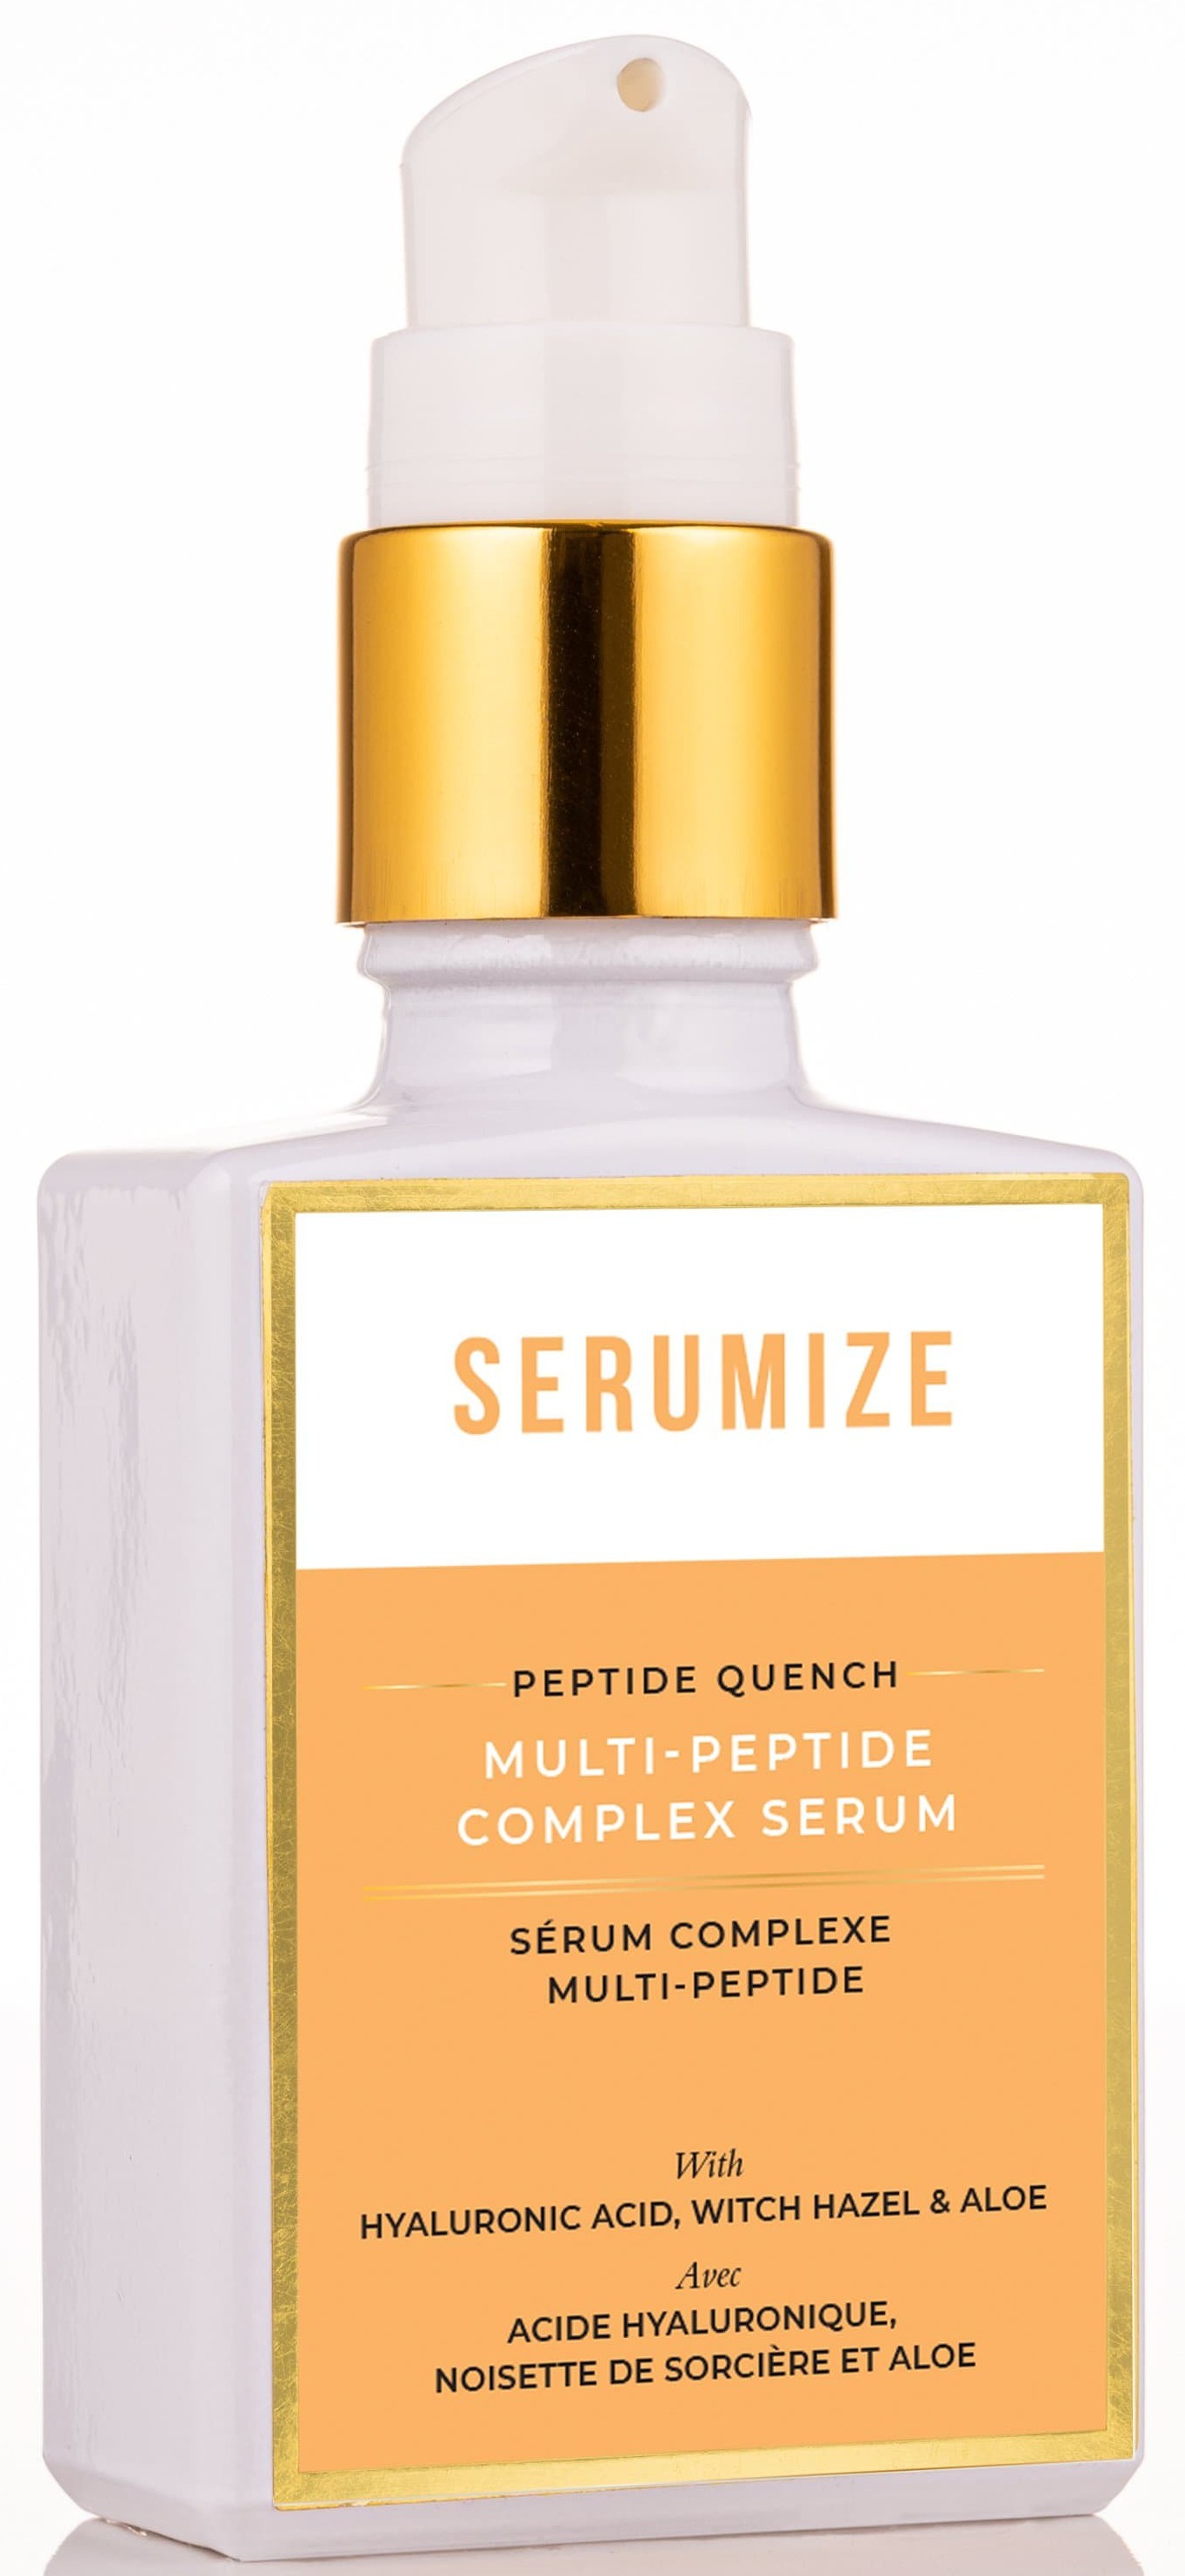 Serumize Peptides Quench Serum